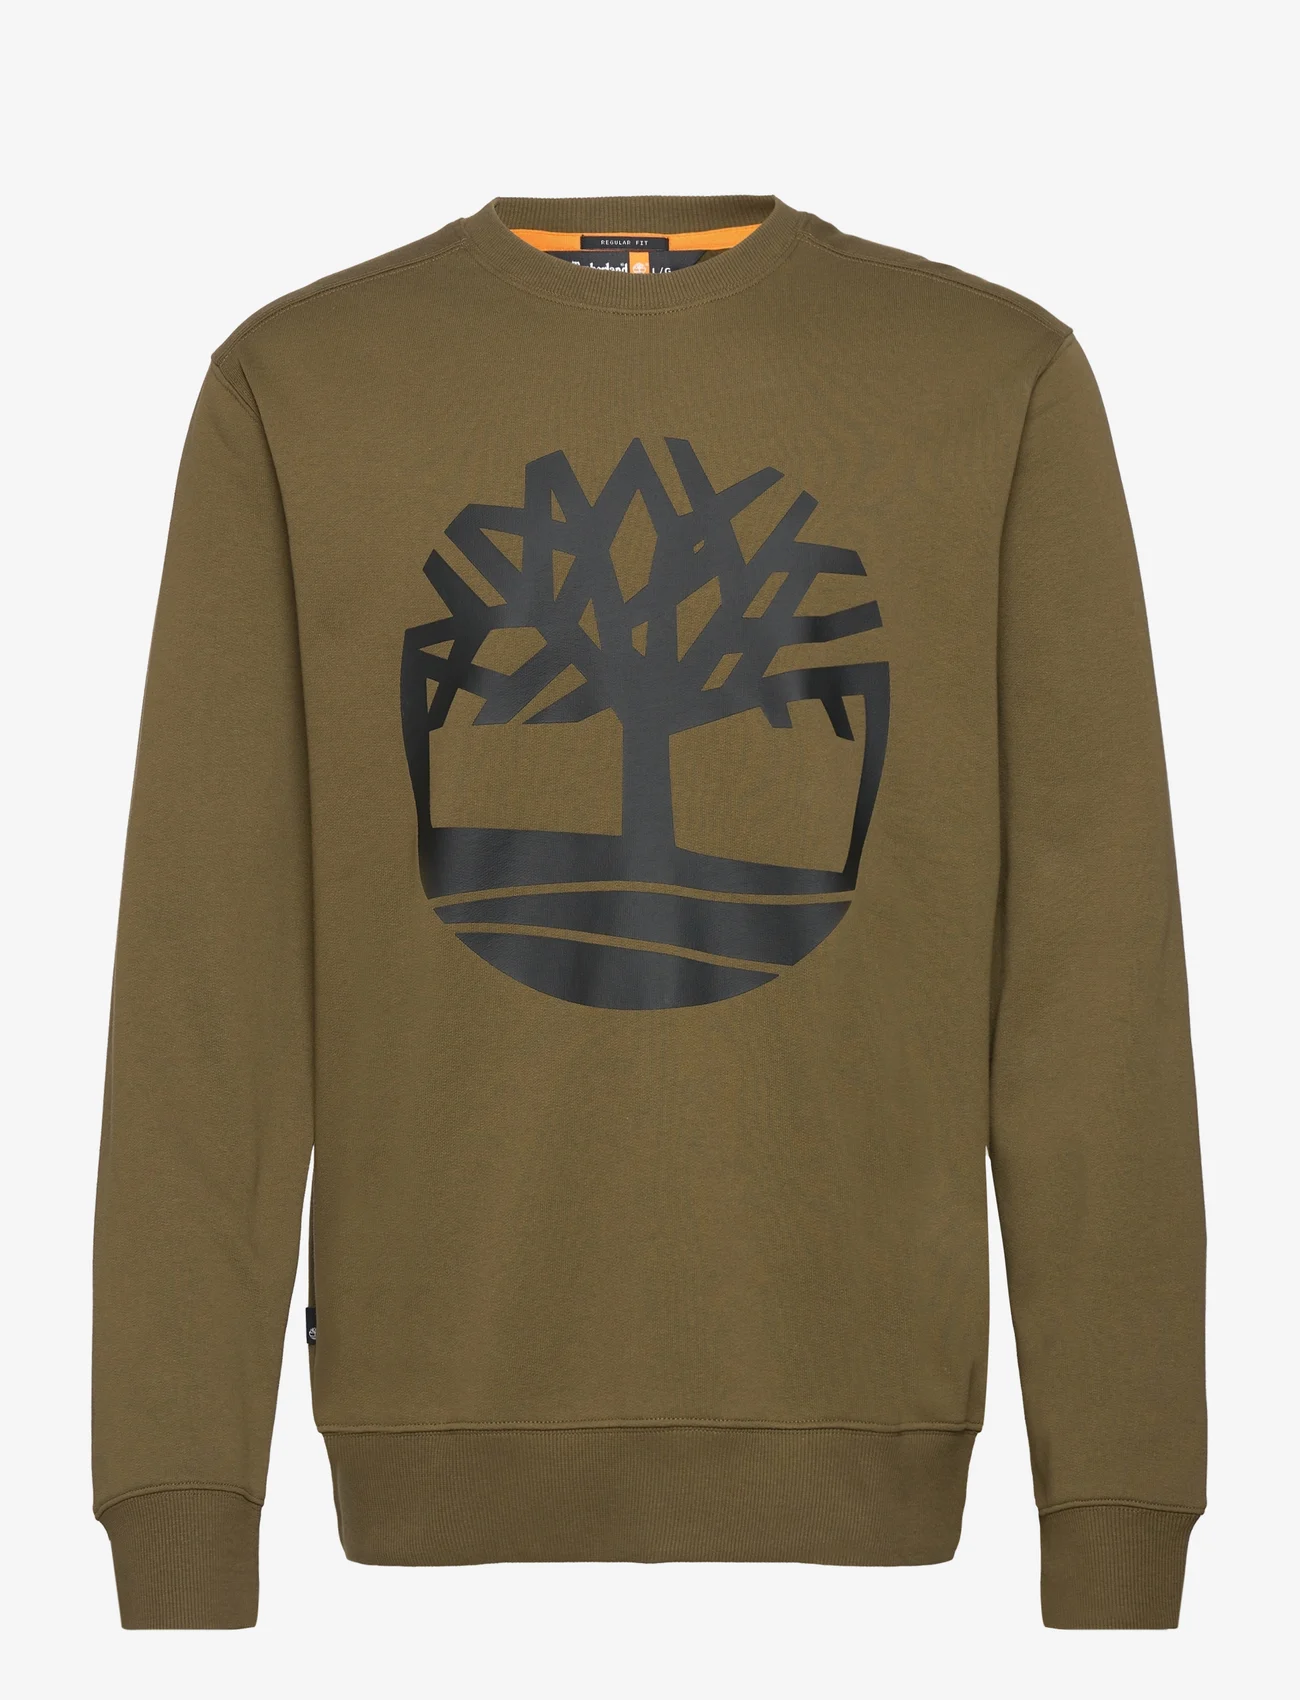 Timberland - Core Logo Crew Bb - sweatshirts - dk olive/blk - 0